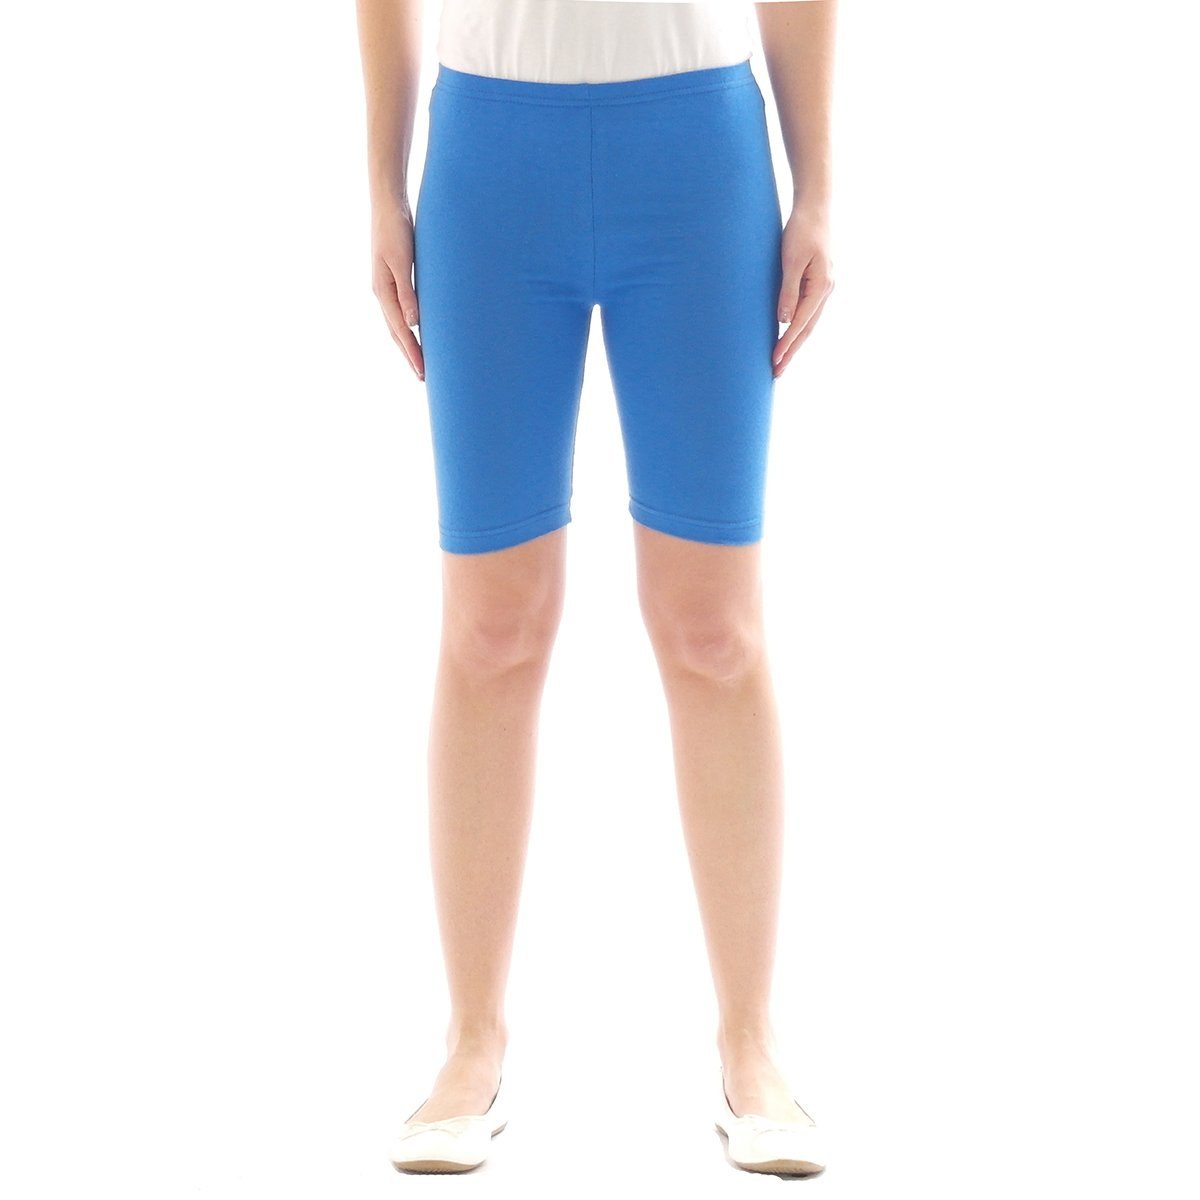 SYS Kinder Sport Pants Shorts Shorts Jungen 1/2 blau Mädchen Baumwolle